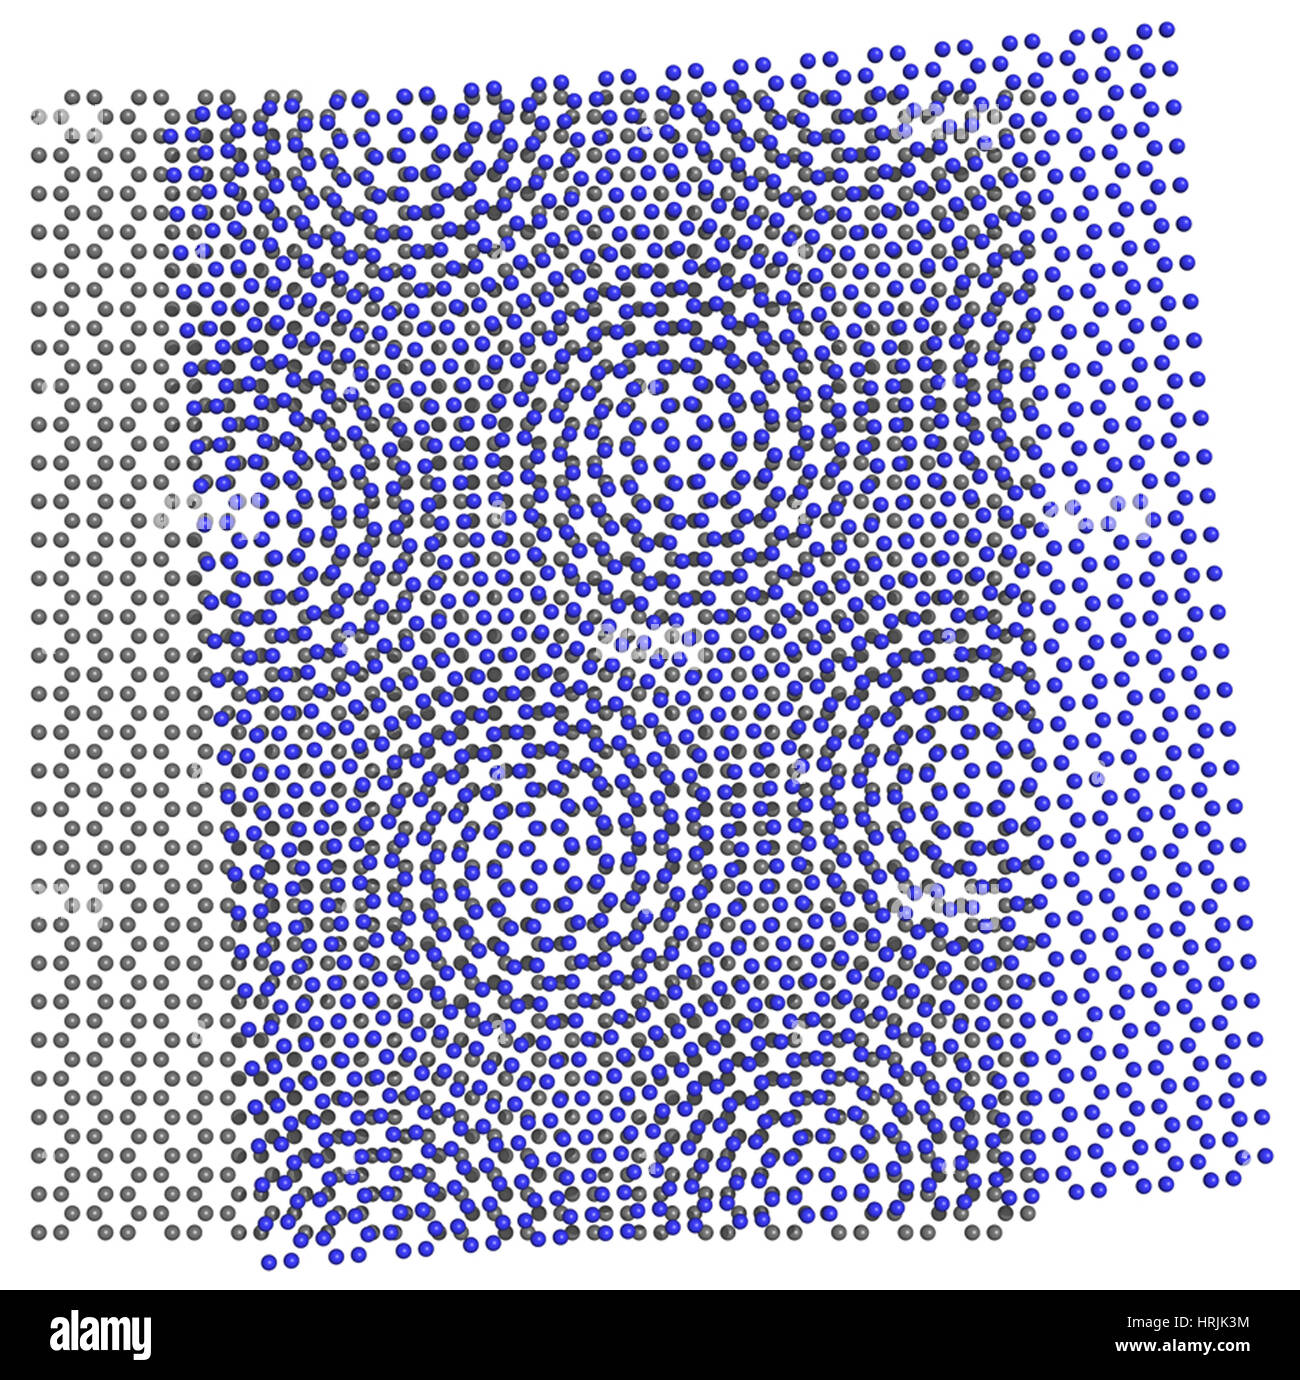 Graphene, Atomic Scale MoirÌ© Patterns Stock Photo